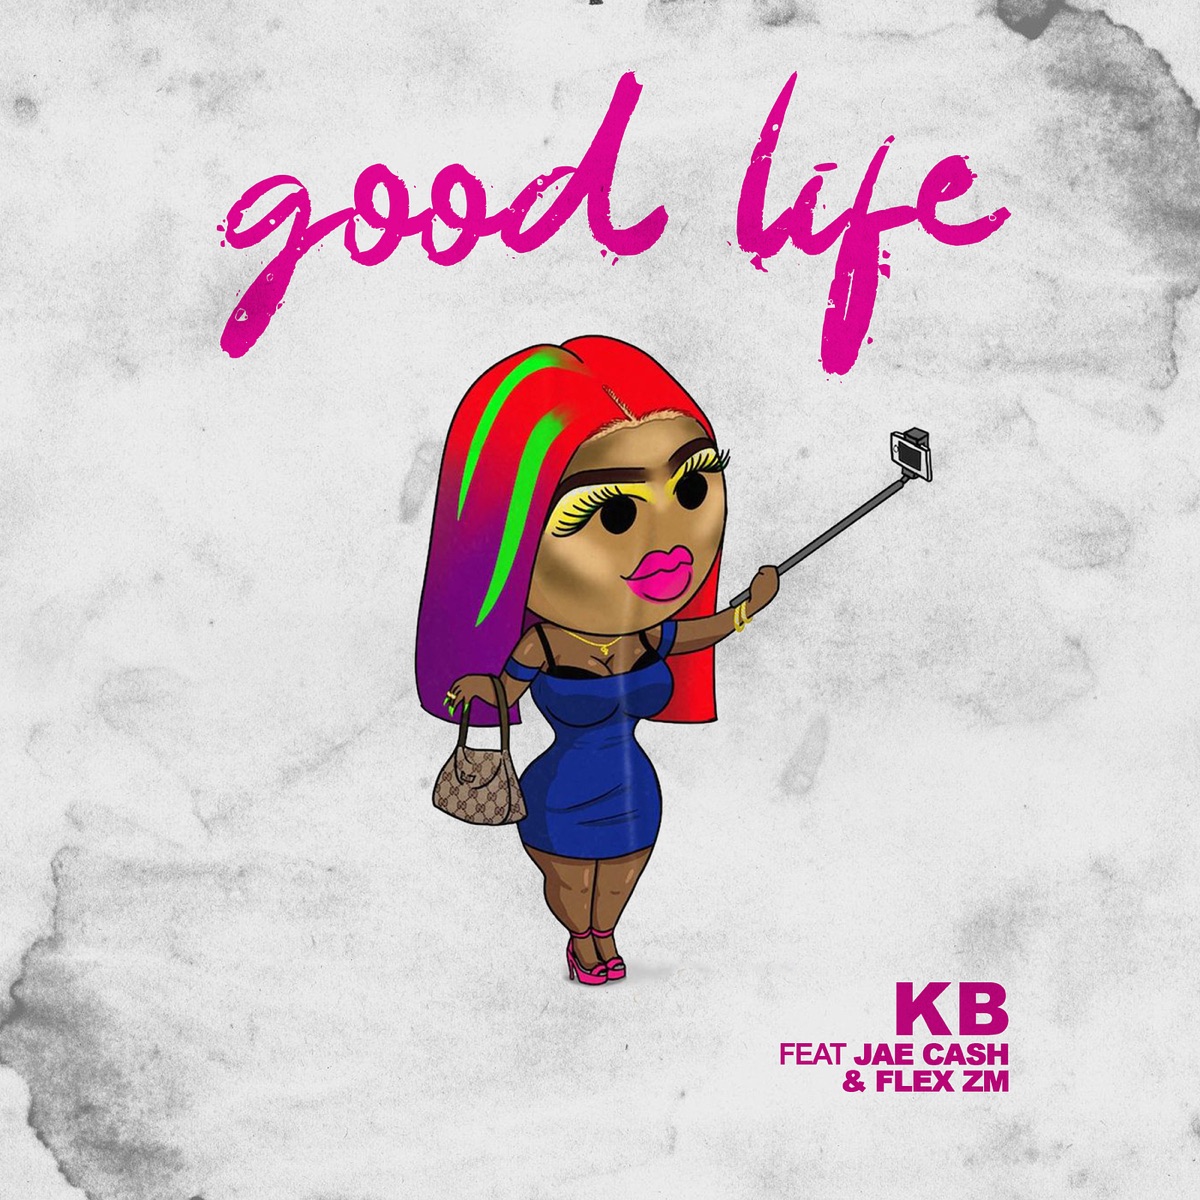 KB ft. Jae Cash & Flex ZM - Good Life